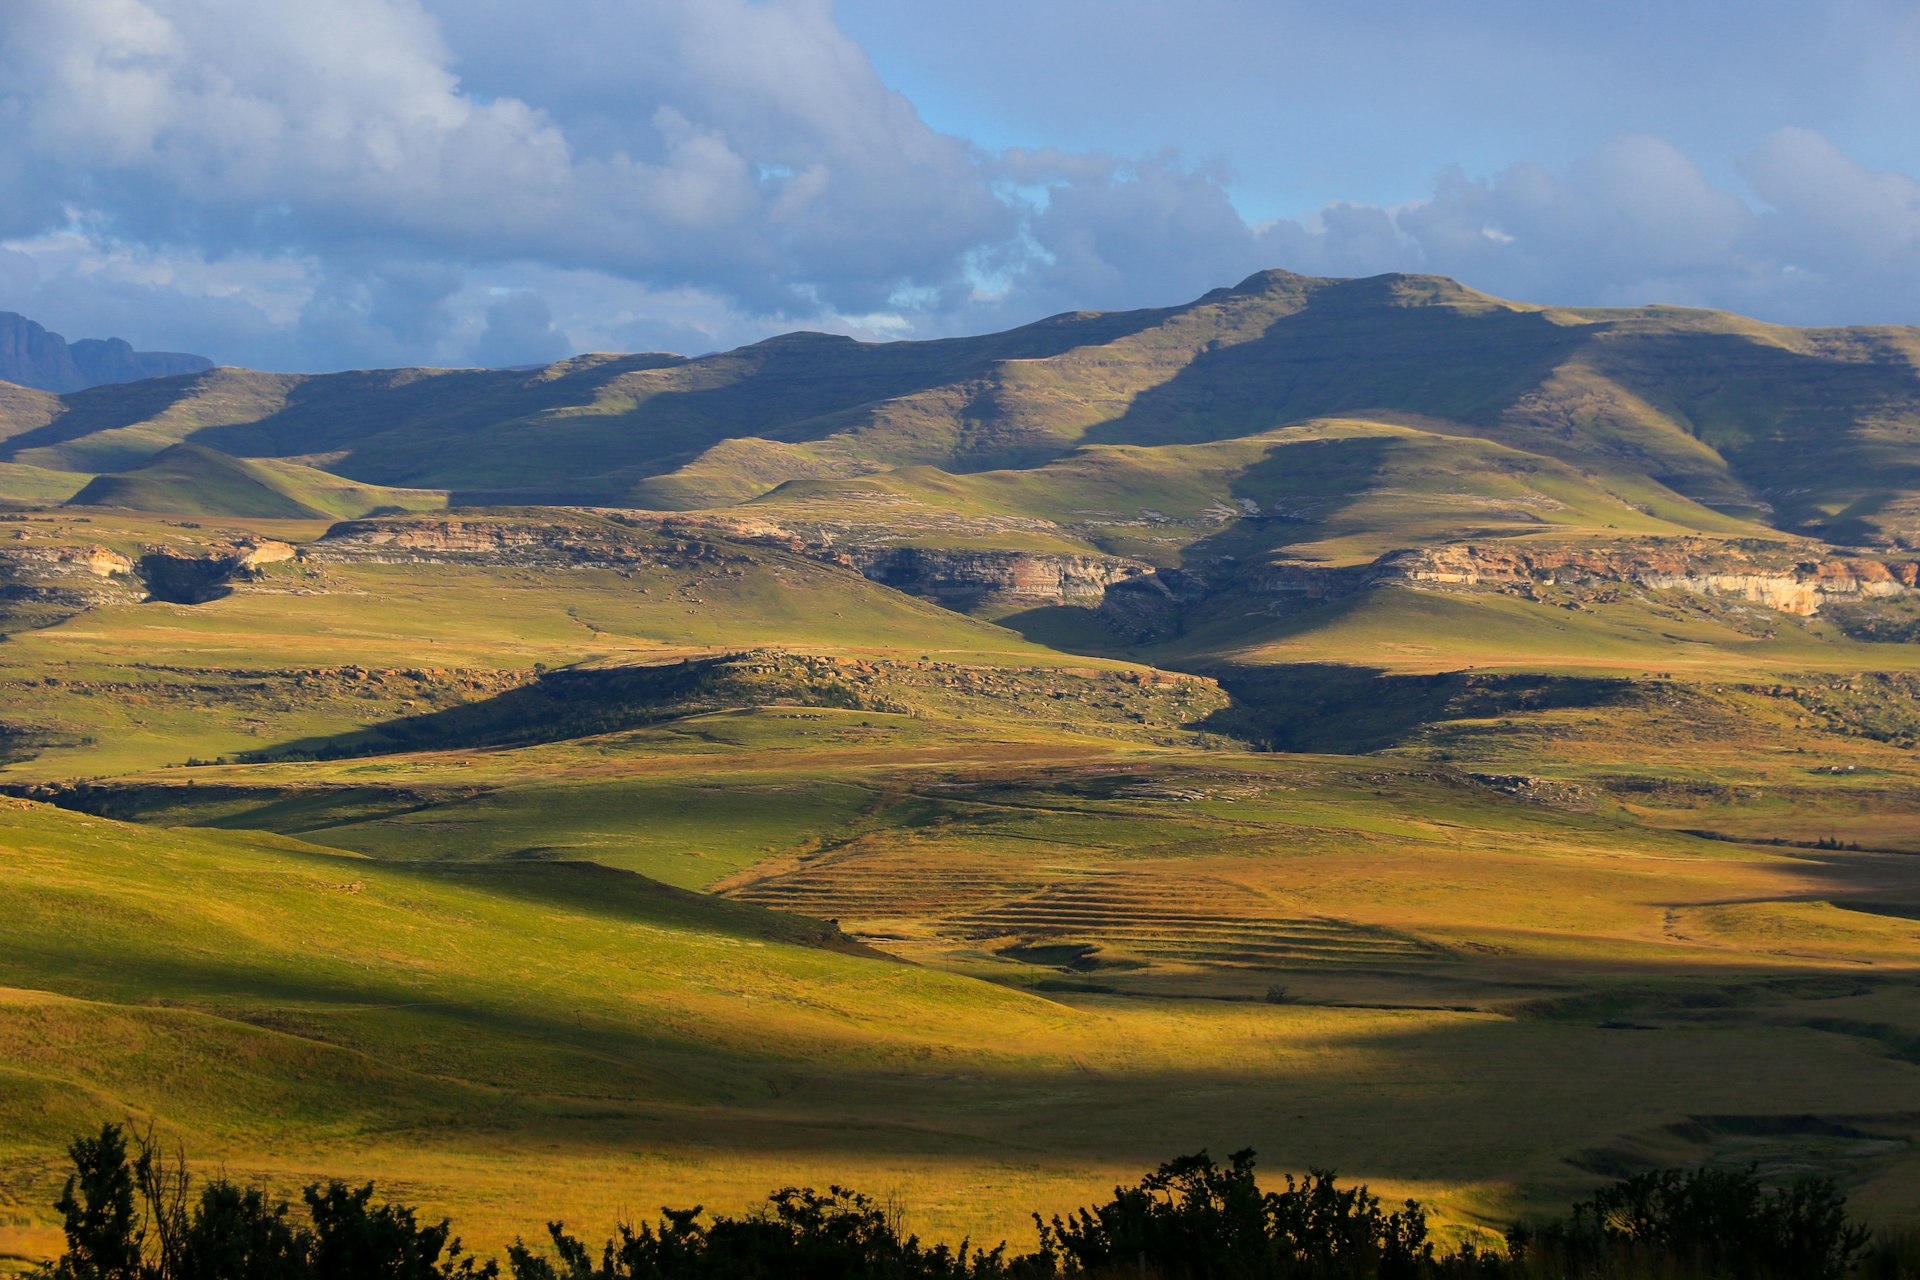 Green hills in Golden Gate Highlands National Park, South Africa 